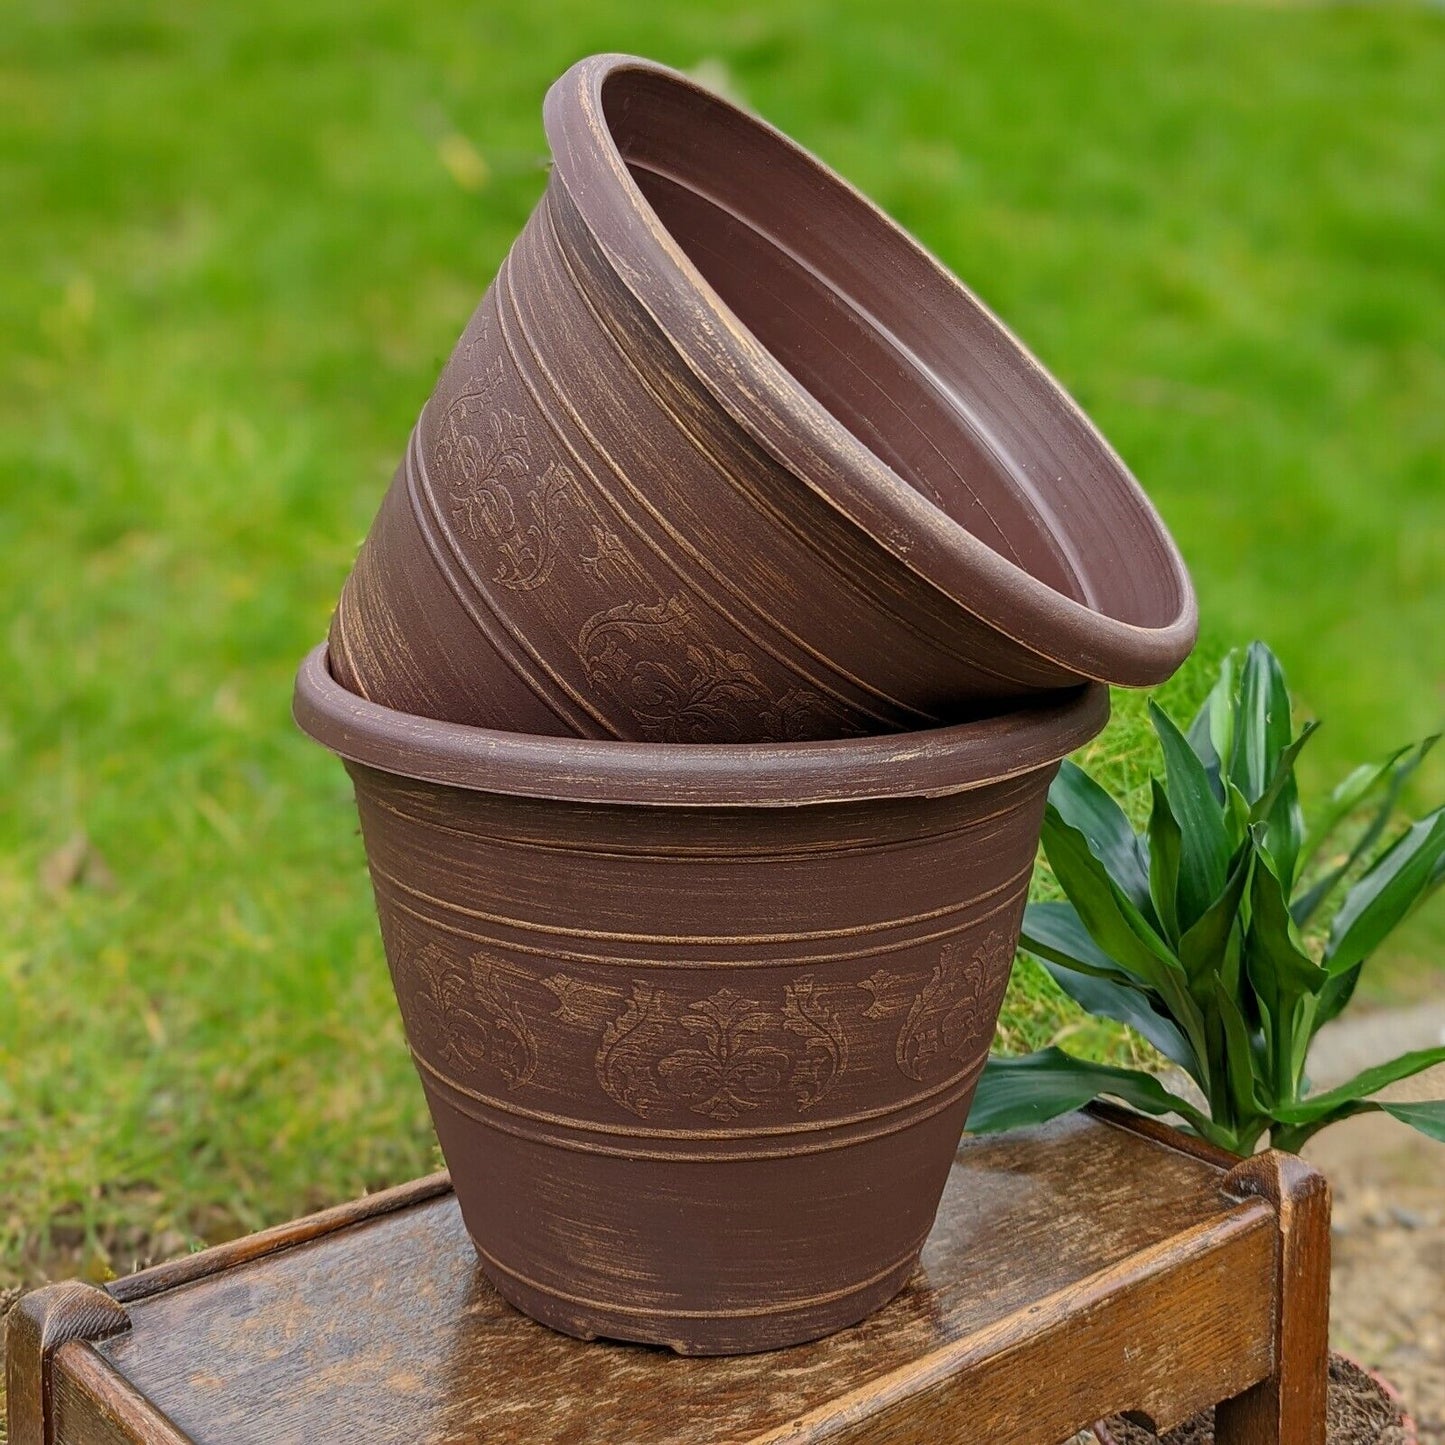 Set of 2 Copper 7.5L Brown Plastic Plant Pot 28cm Godiva Round Garden Planter